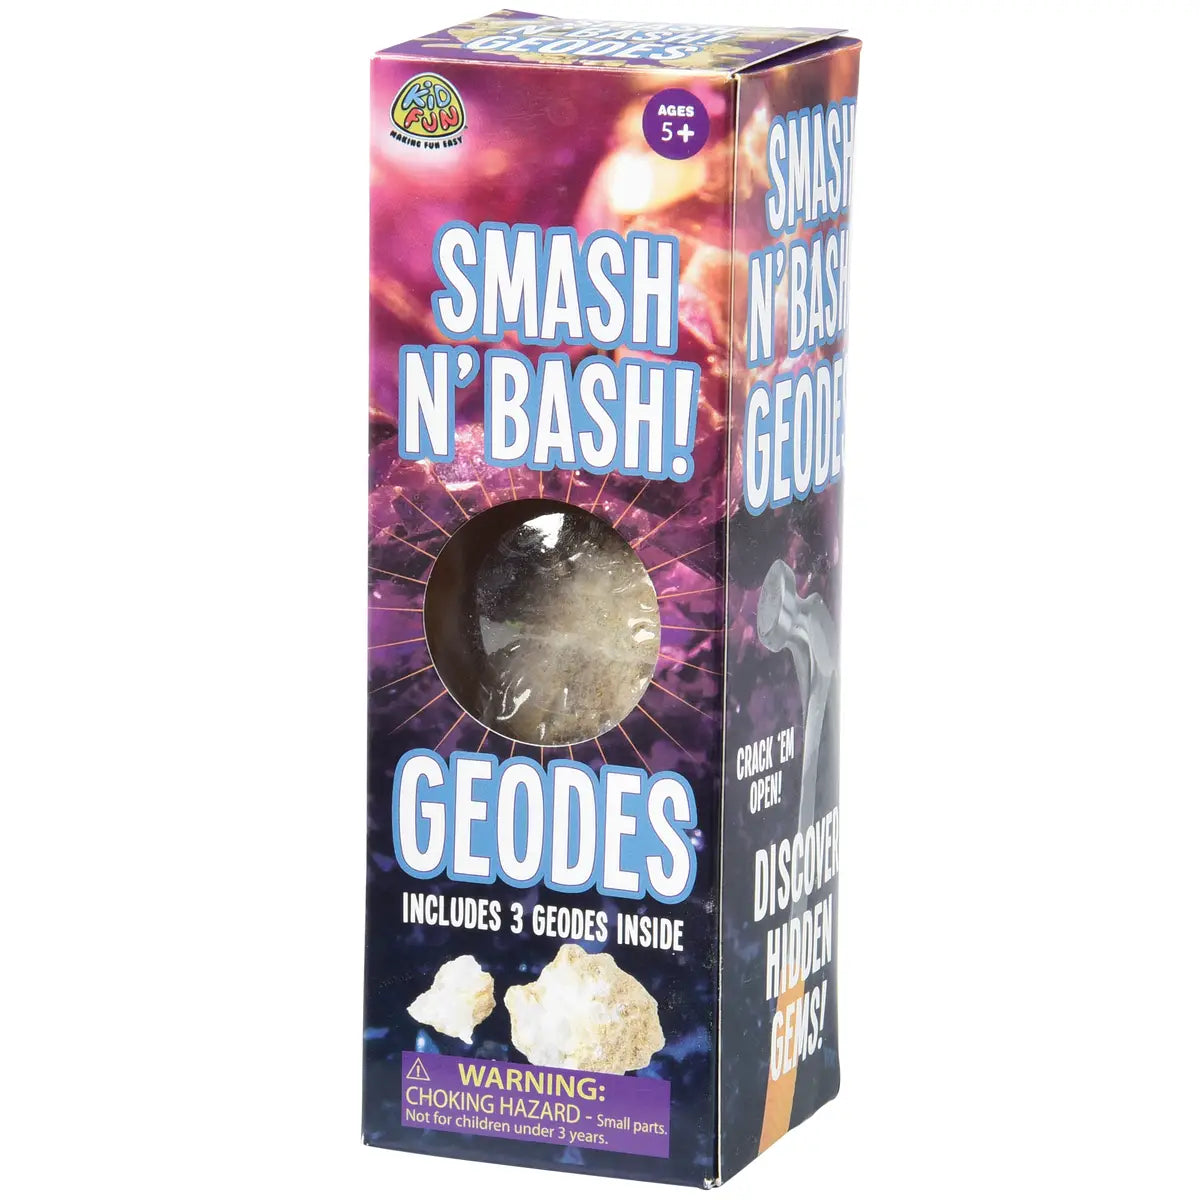 Smash N Bash Geodes